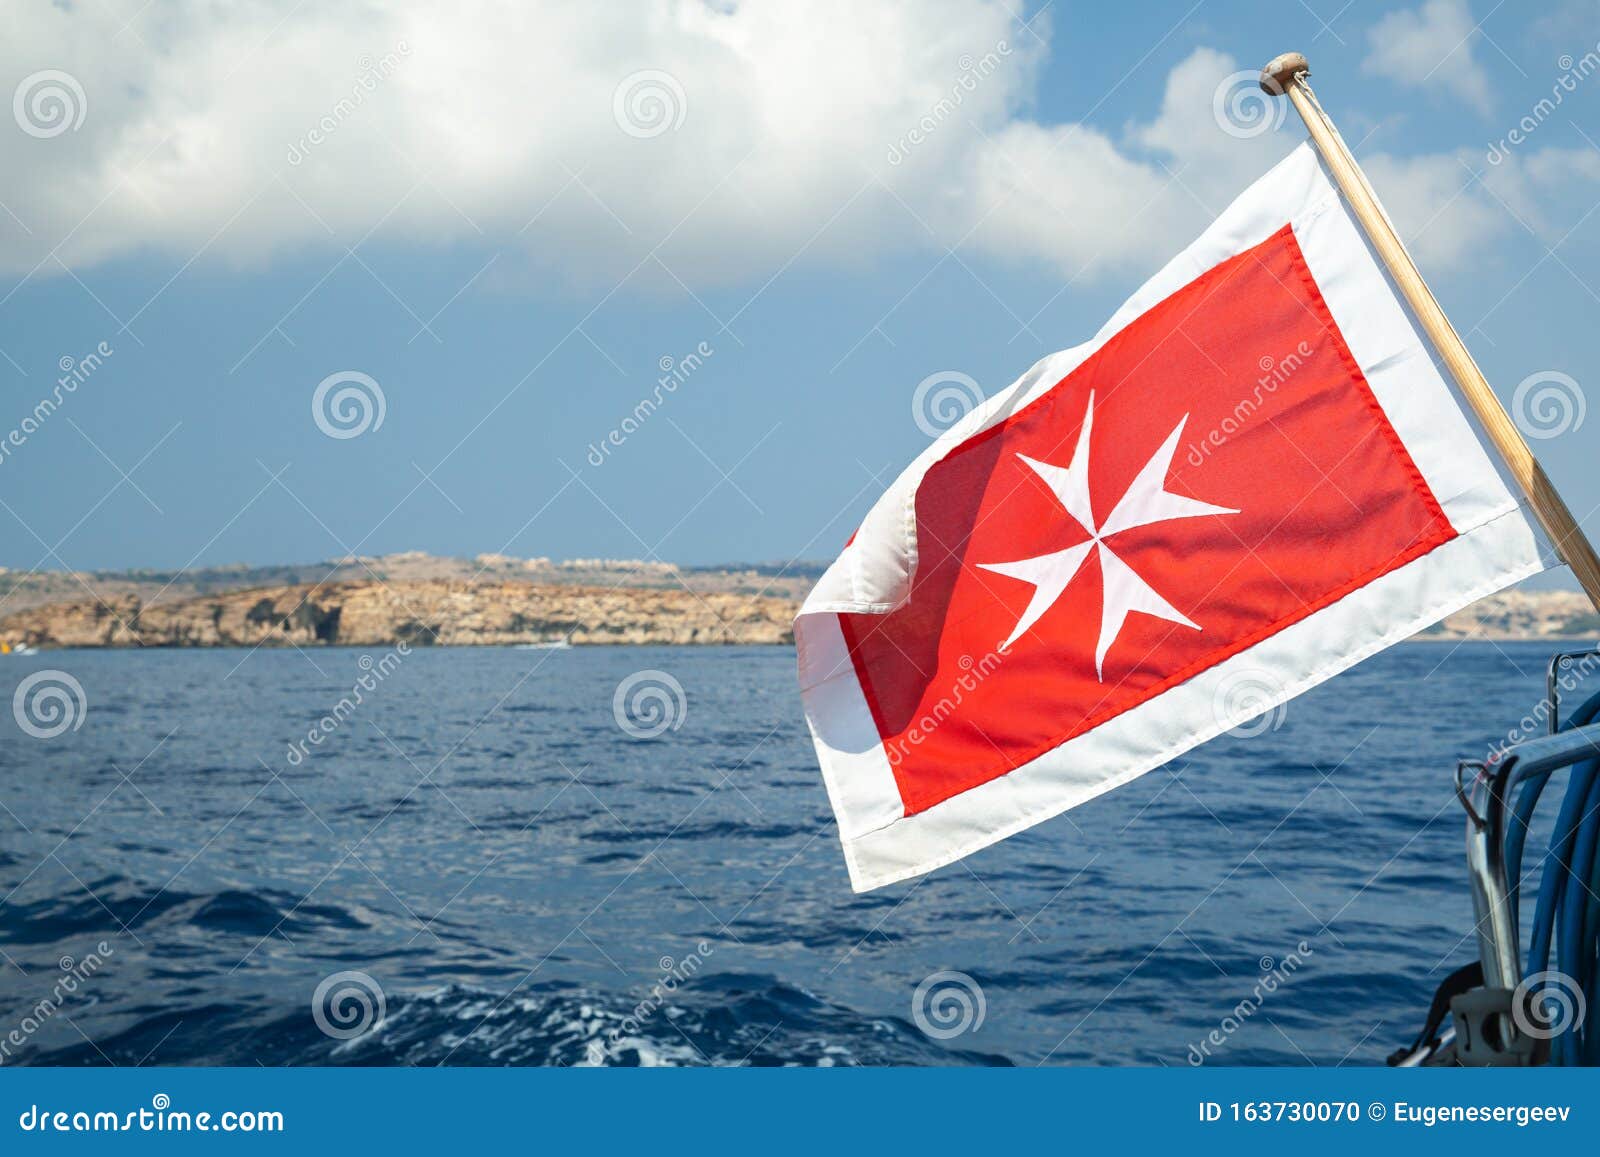 AZ FLAG TISCHFLAGGE Malta 21x14cm flaggen Republik Malta TISCHFAHNE 14 x 21 cm